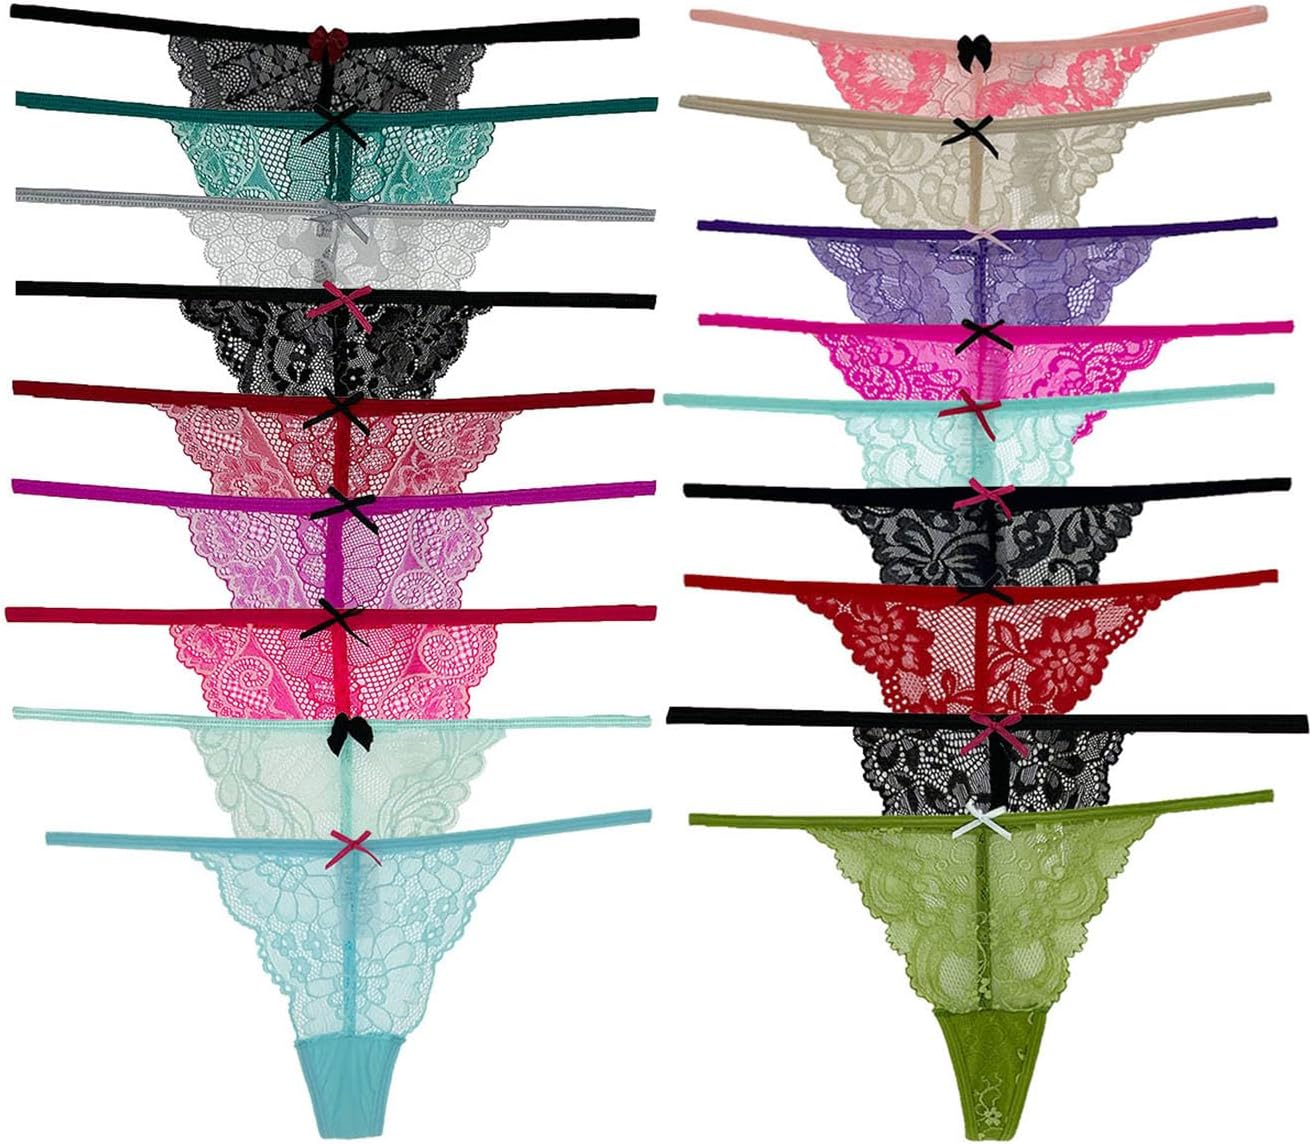 Closecret Women's Panties Cotton Thongs Pack of 6pcs G-String